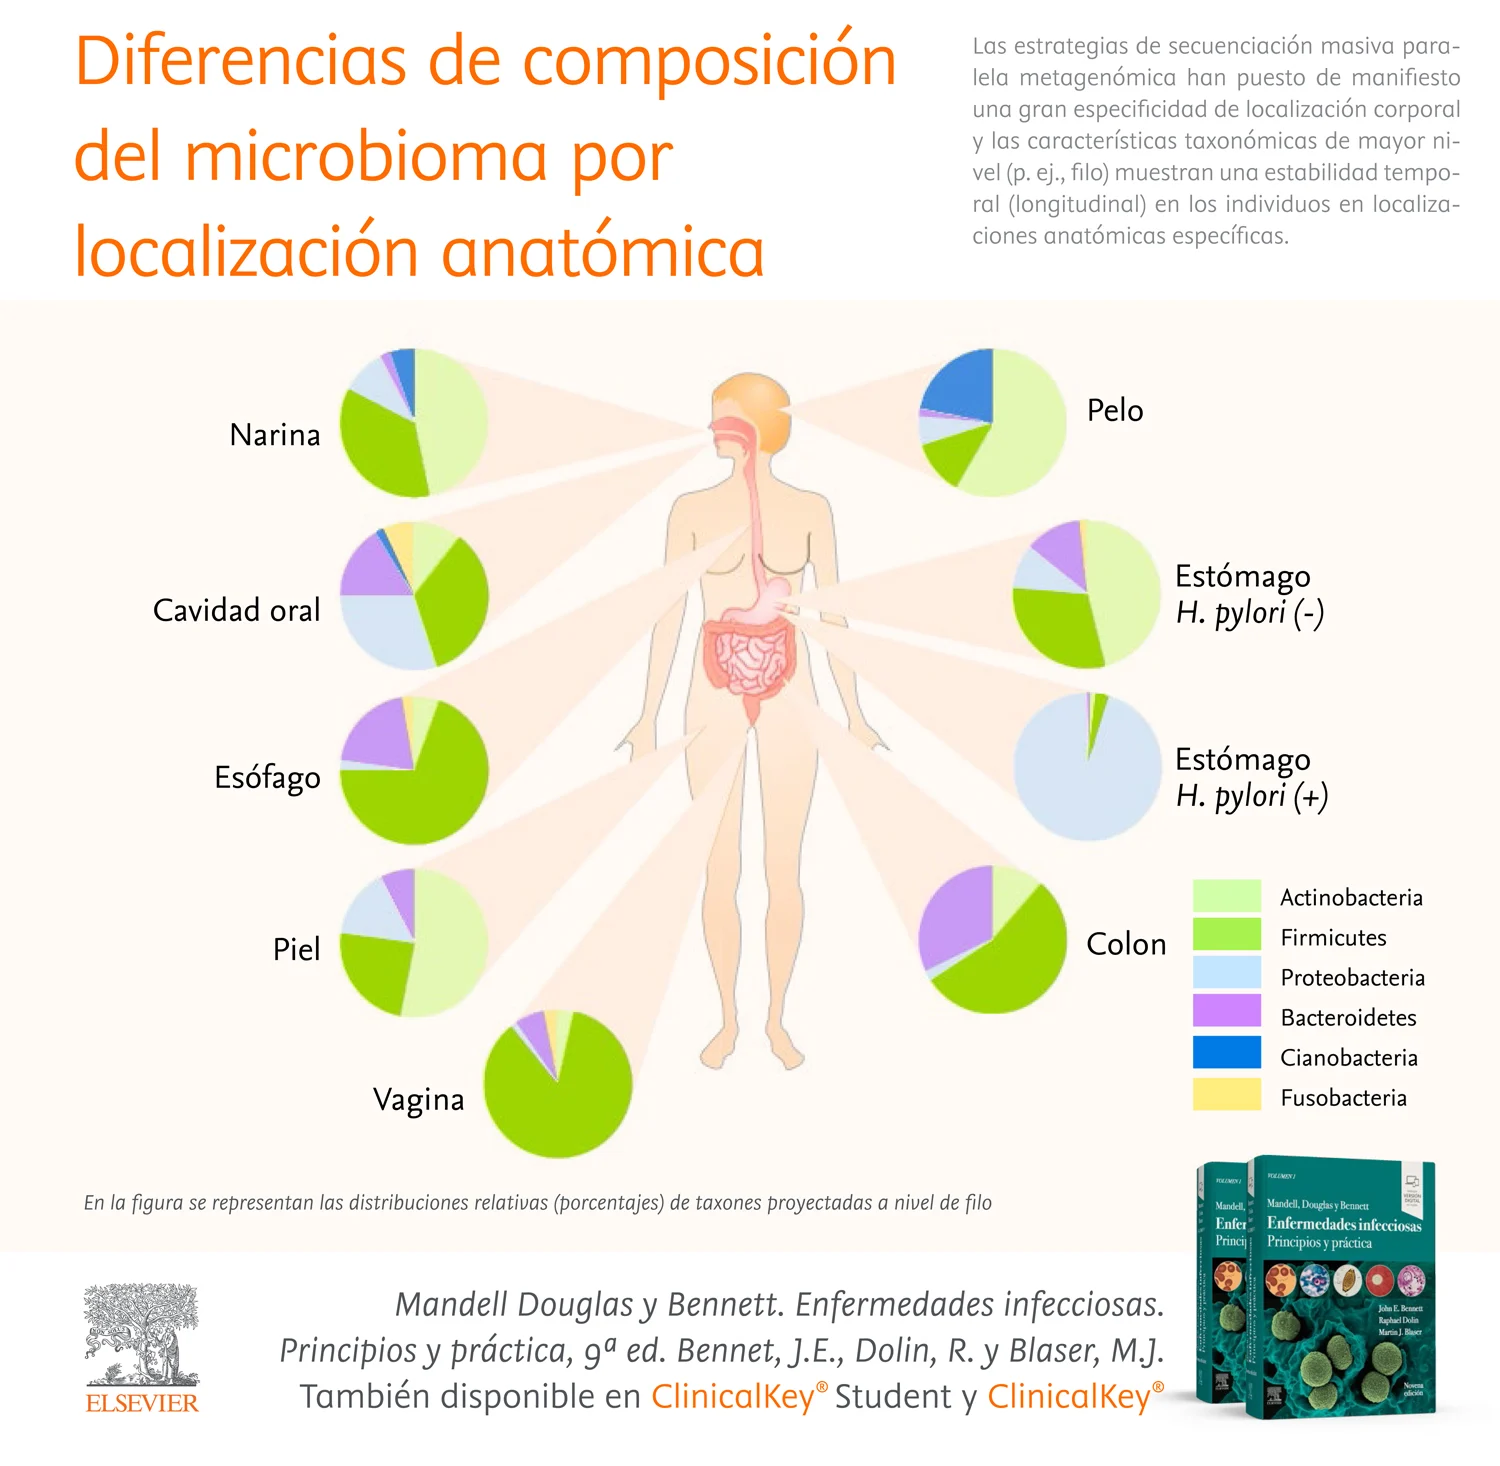 Diferencias de composición del microbioma por localización anatómica